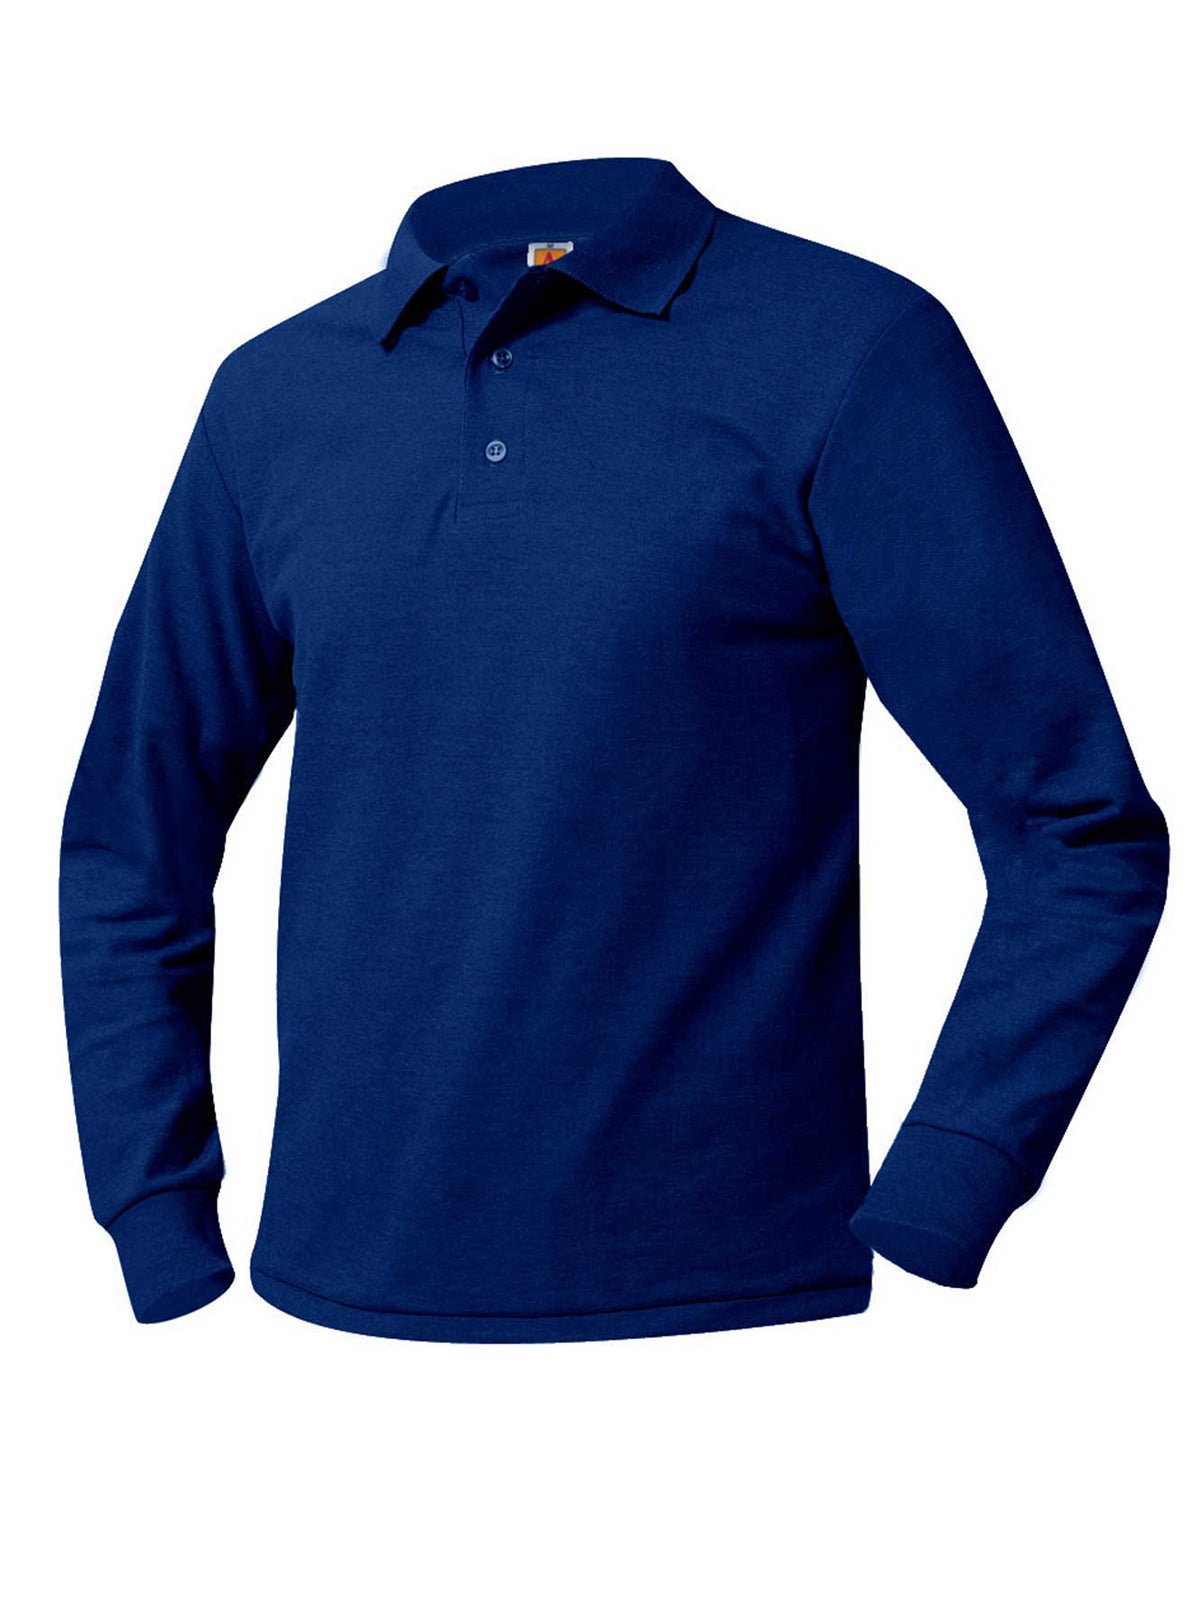 Unisex Long Sleeve Knit Shirt - 8766 - Den Dark Royal